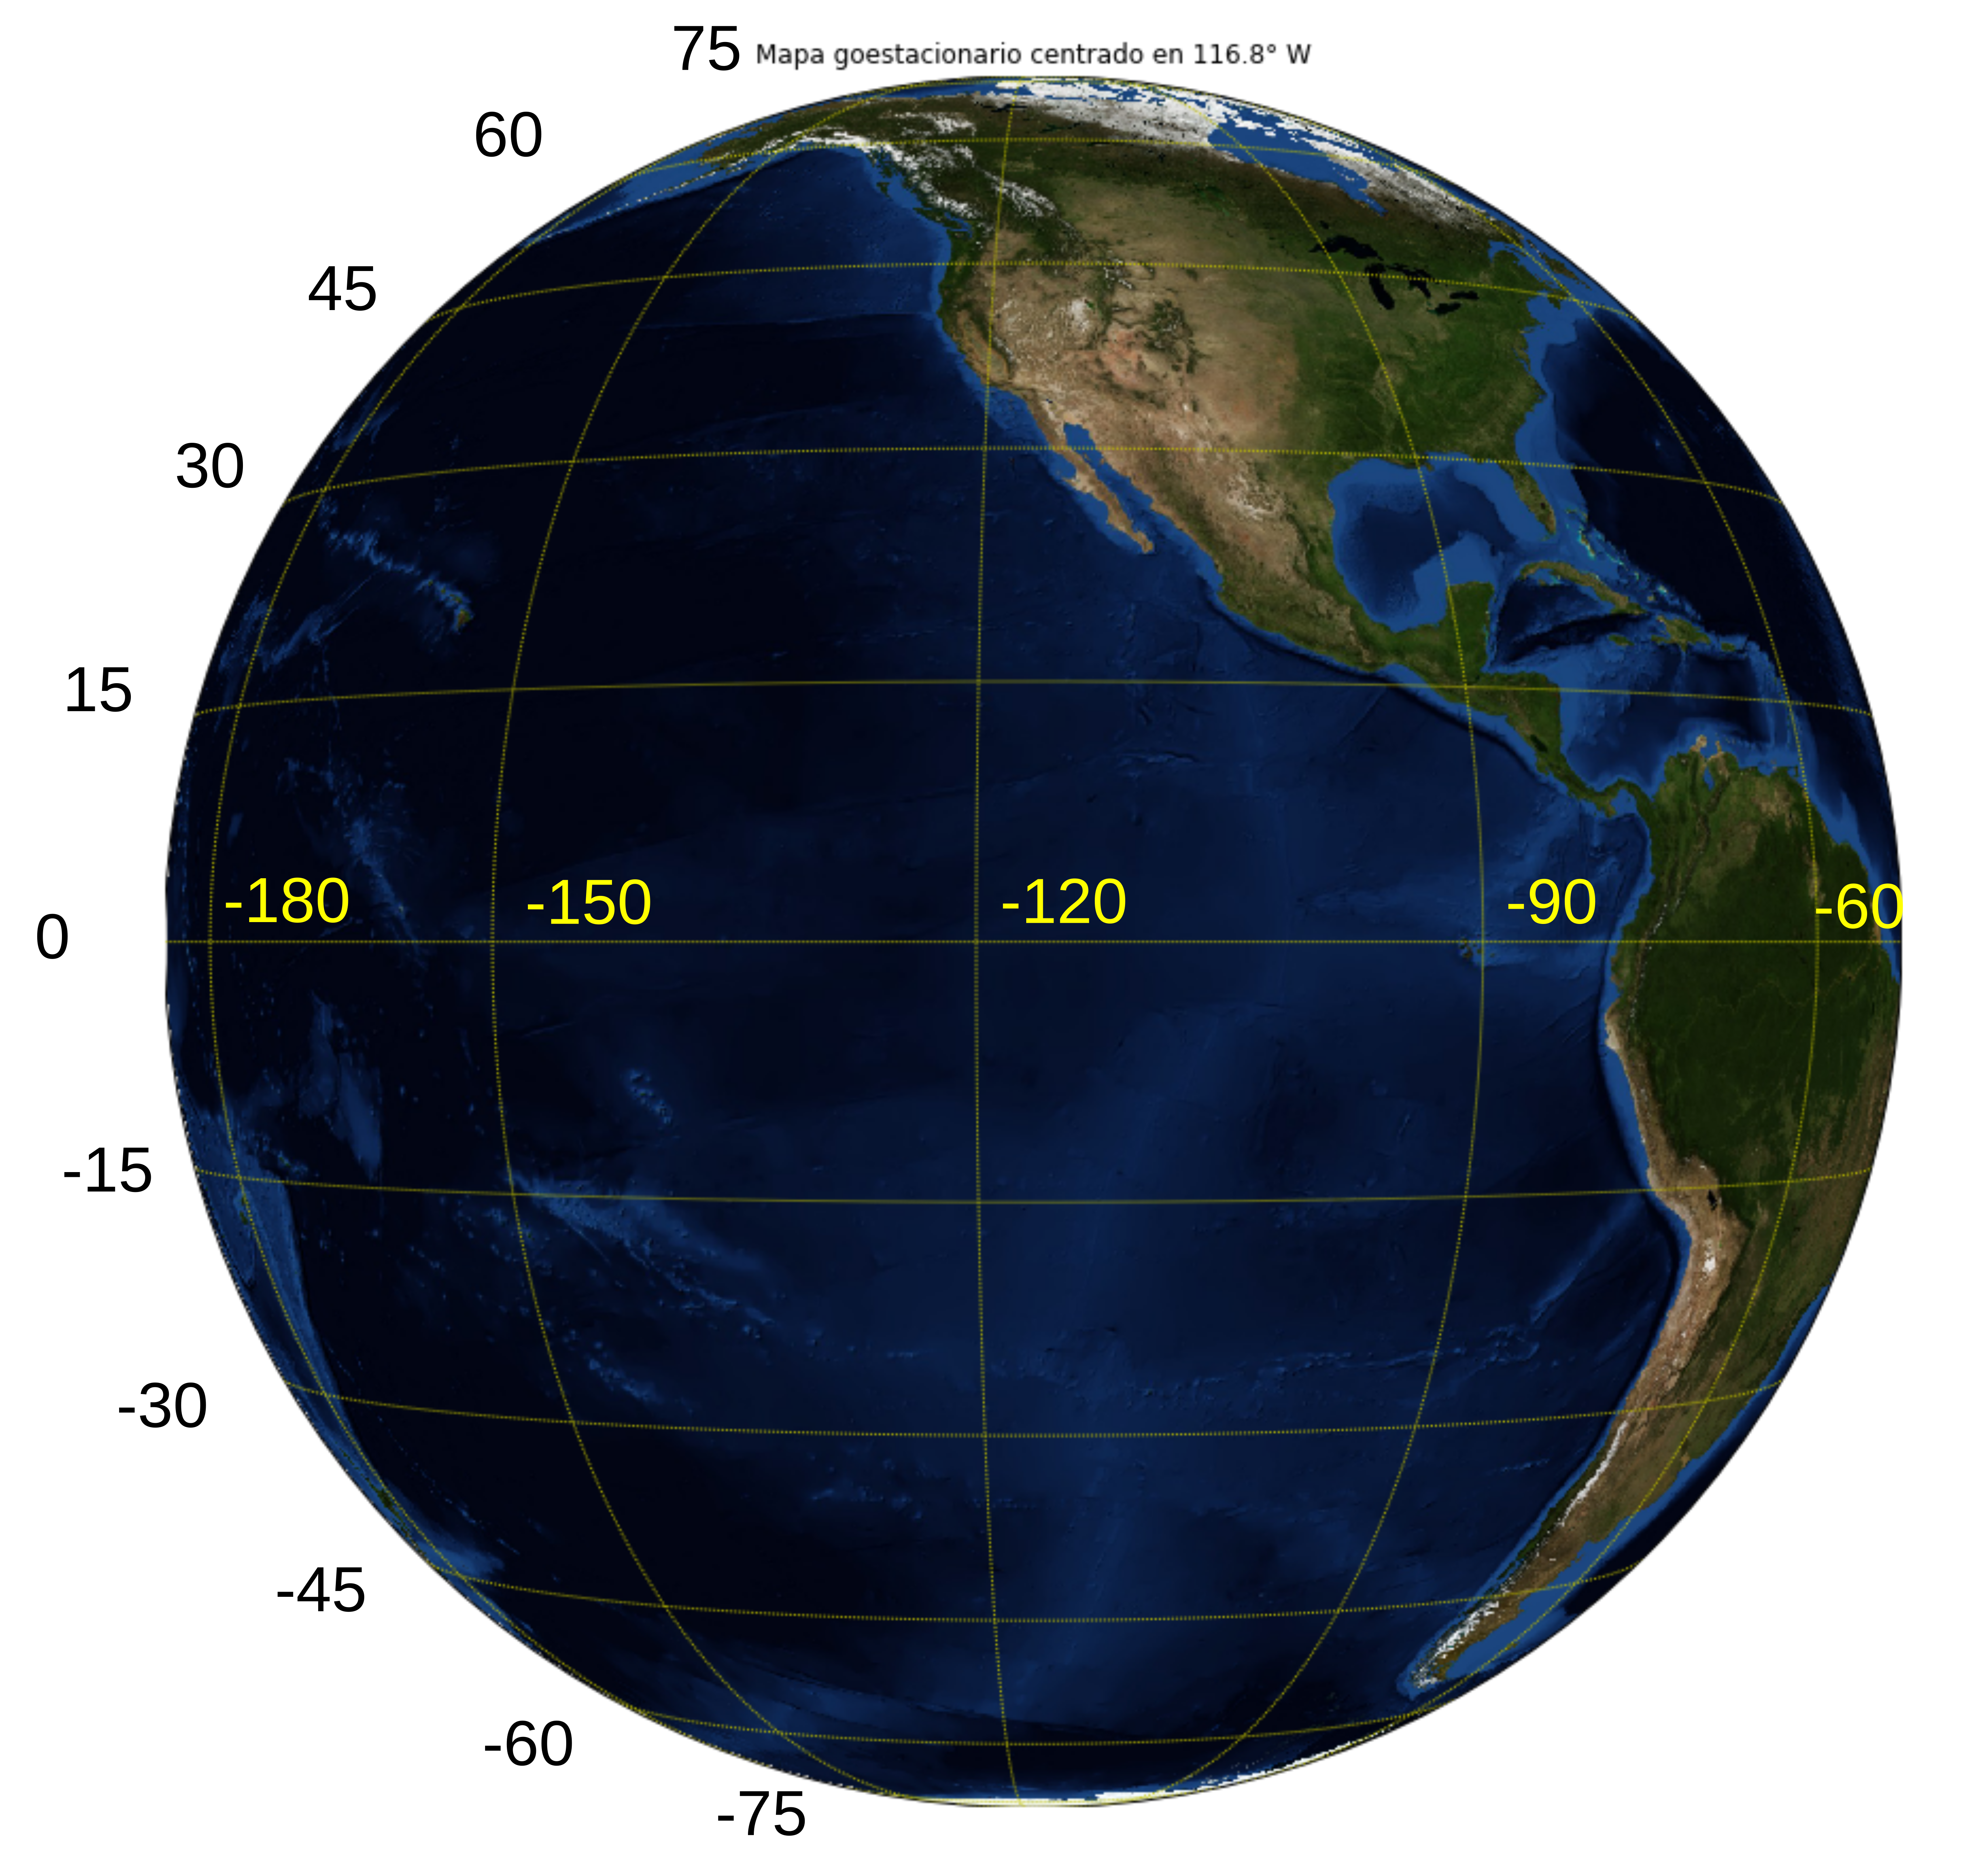 Orbita geoestacionaria 116.8 W